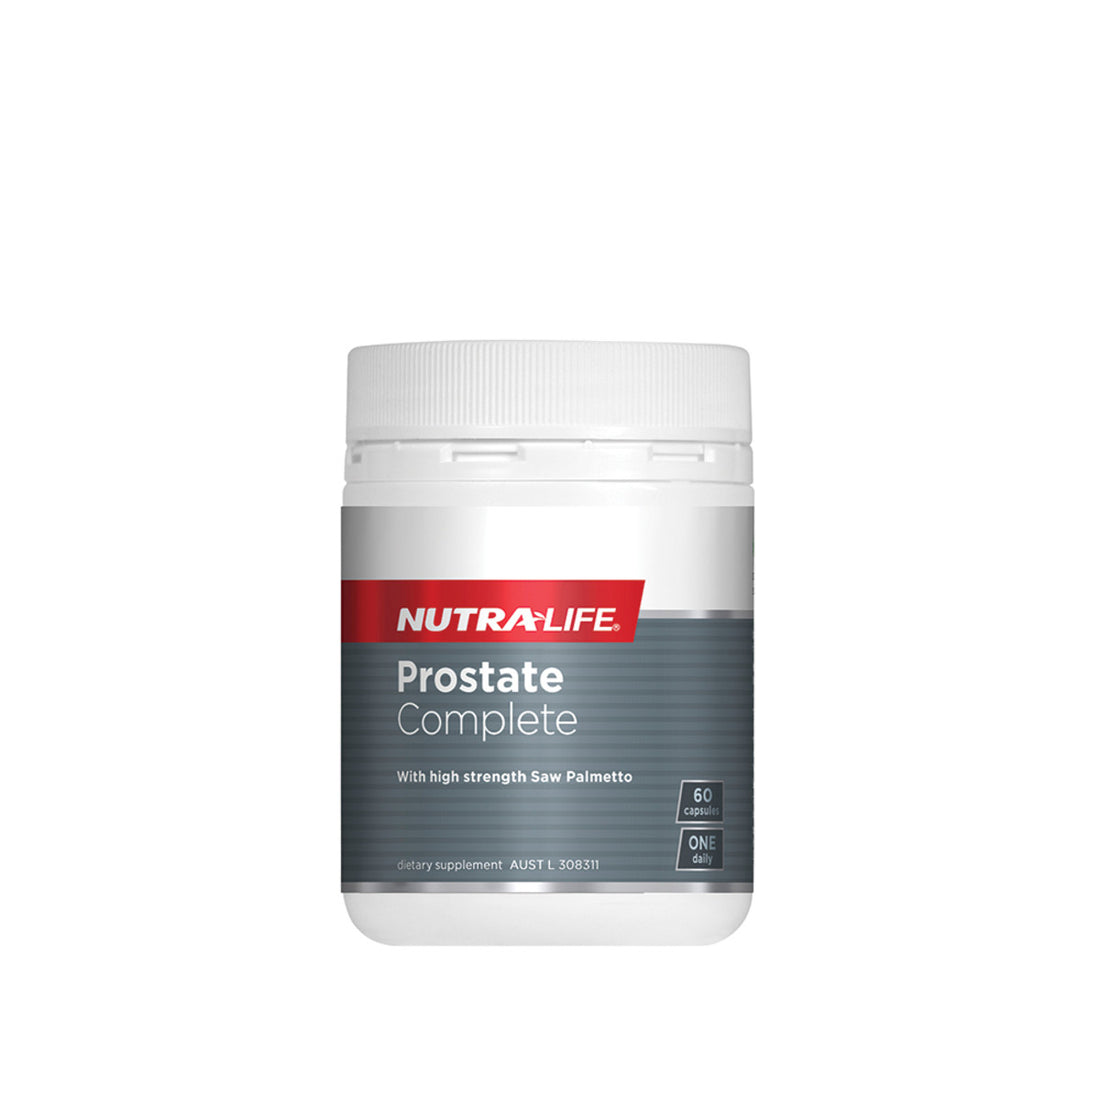 NutraLife Prostate Complete 60c